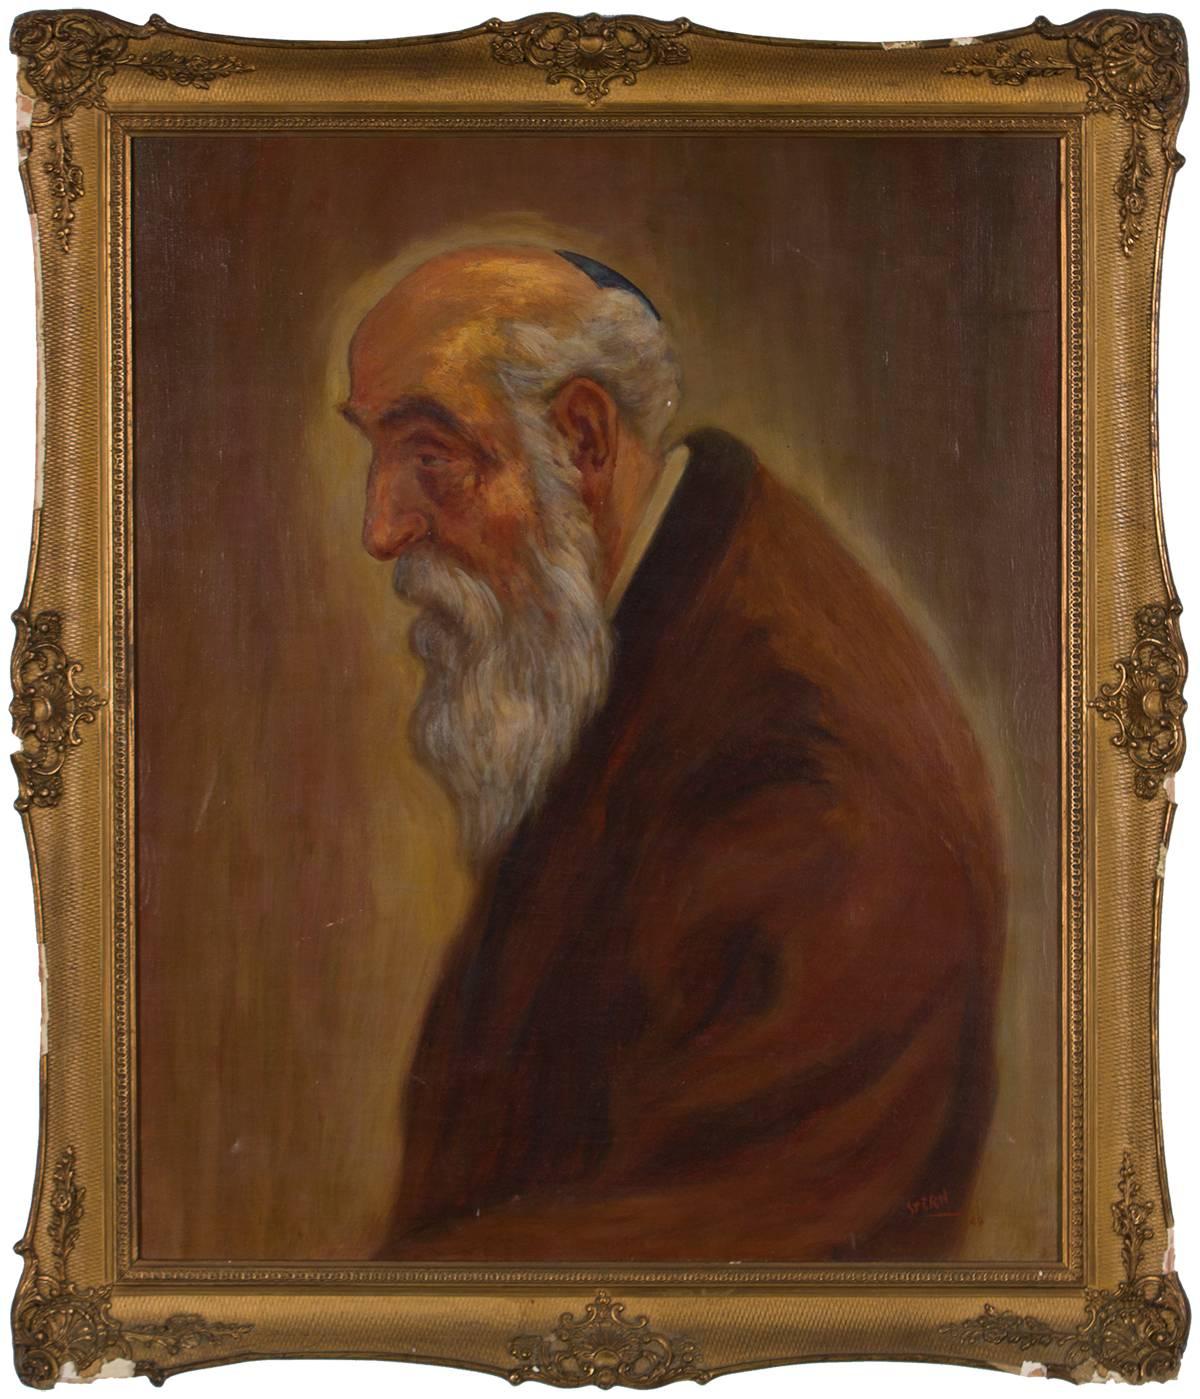 Unknown Portrait Painting - Vieillesse, French Portrait of an Elderly Jewish Man